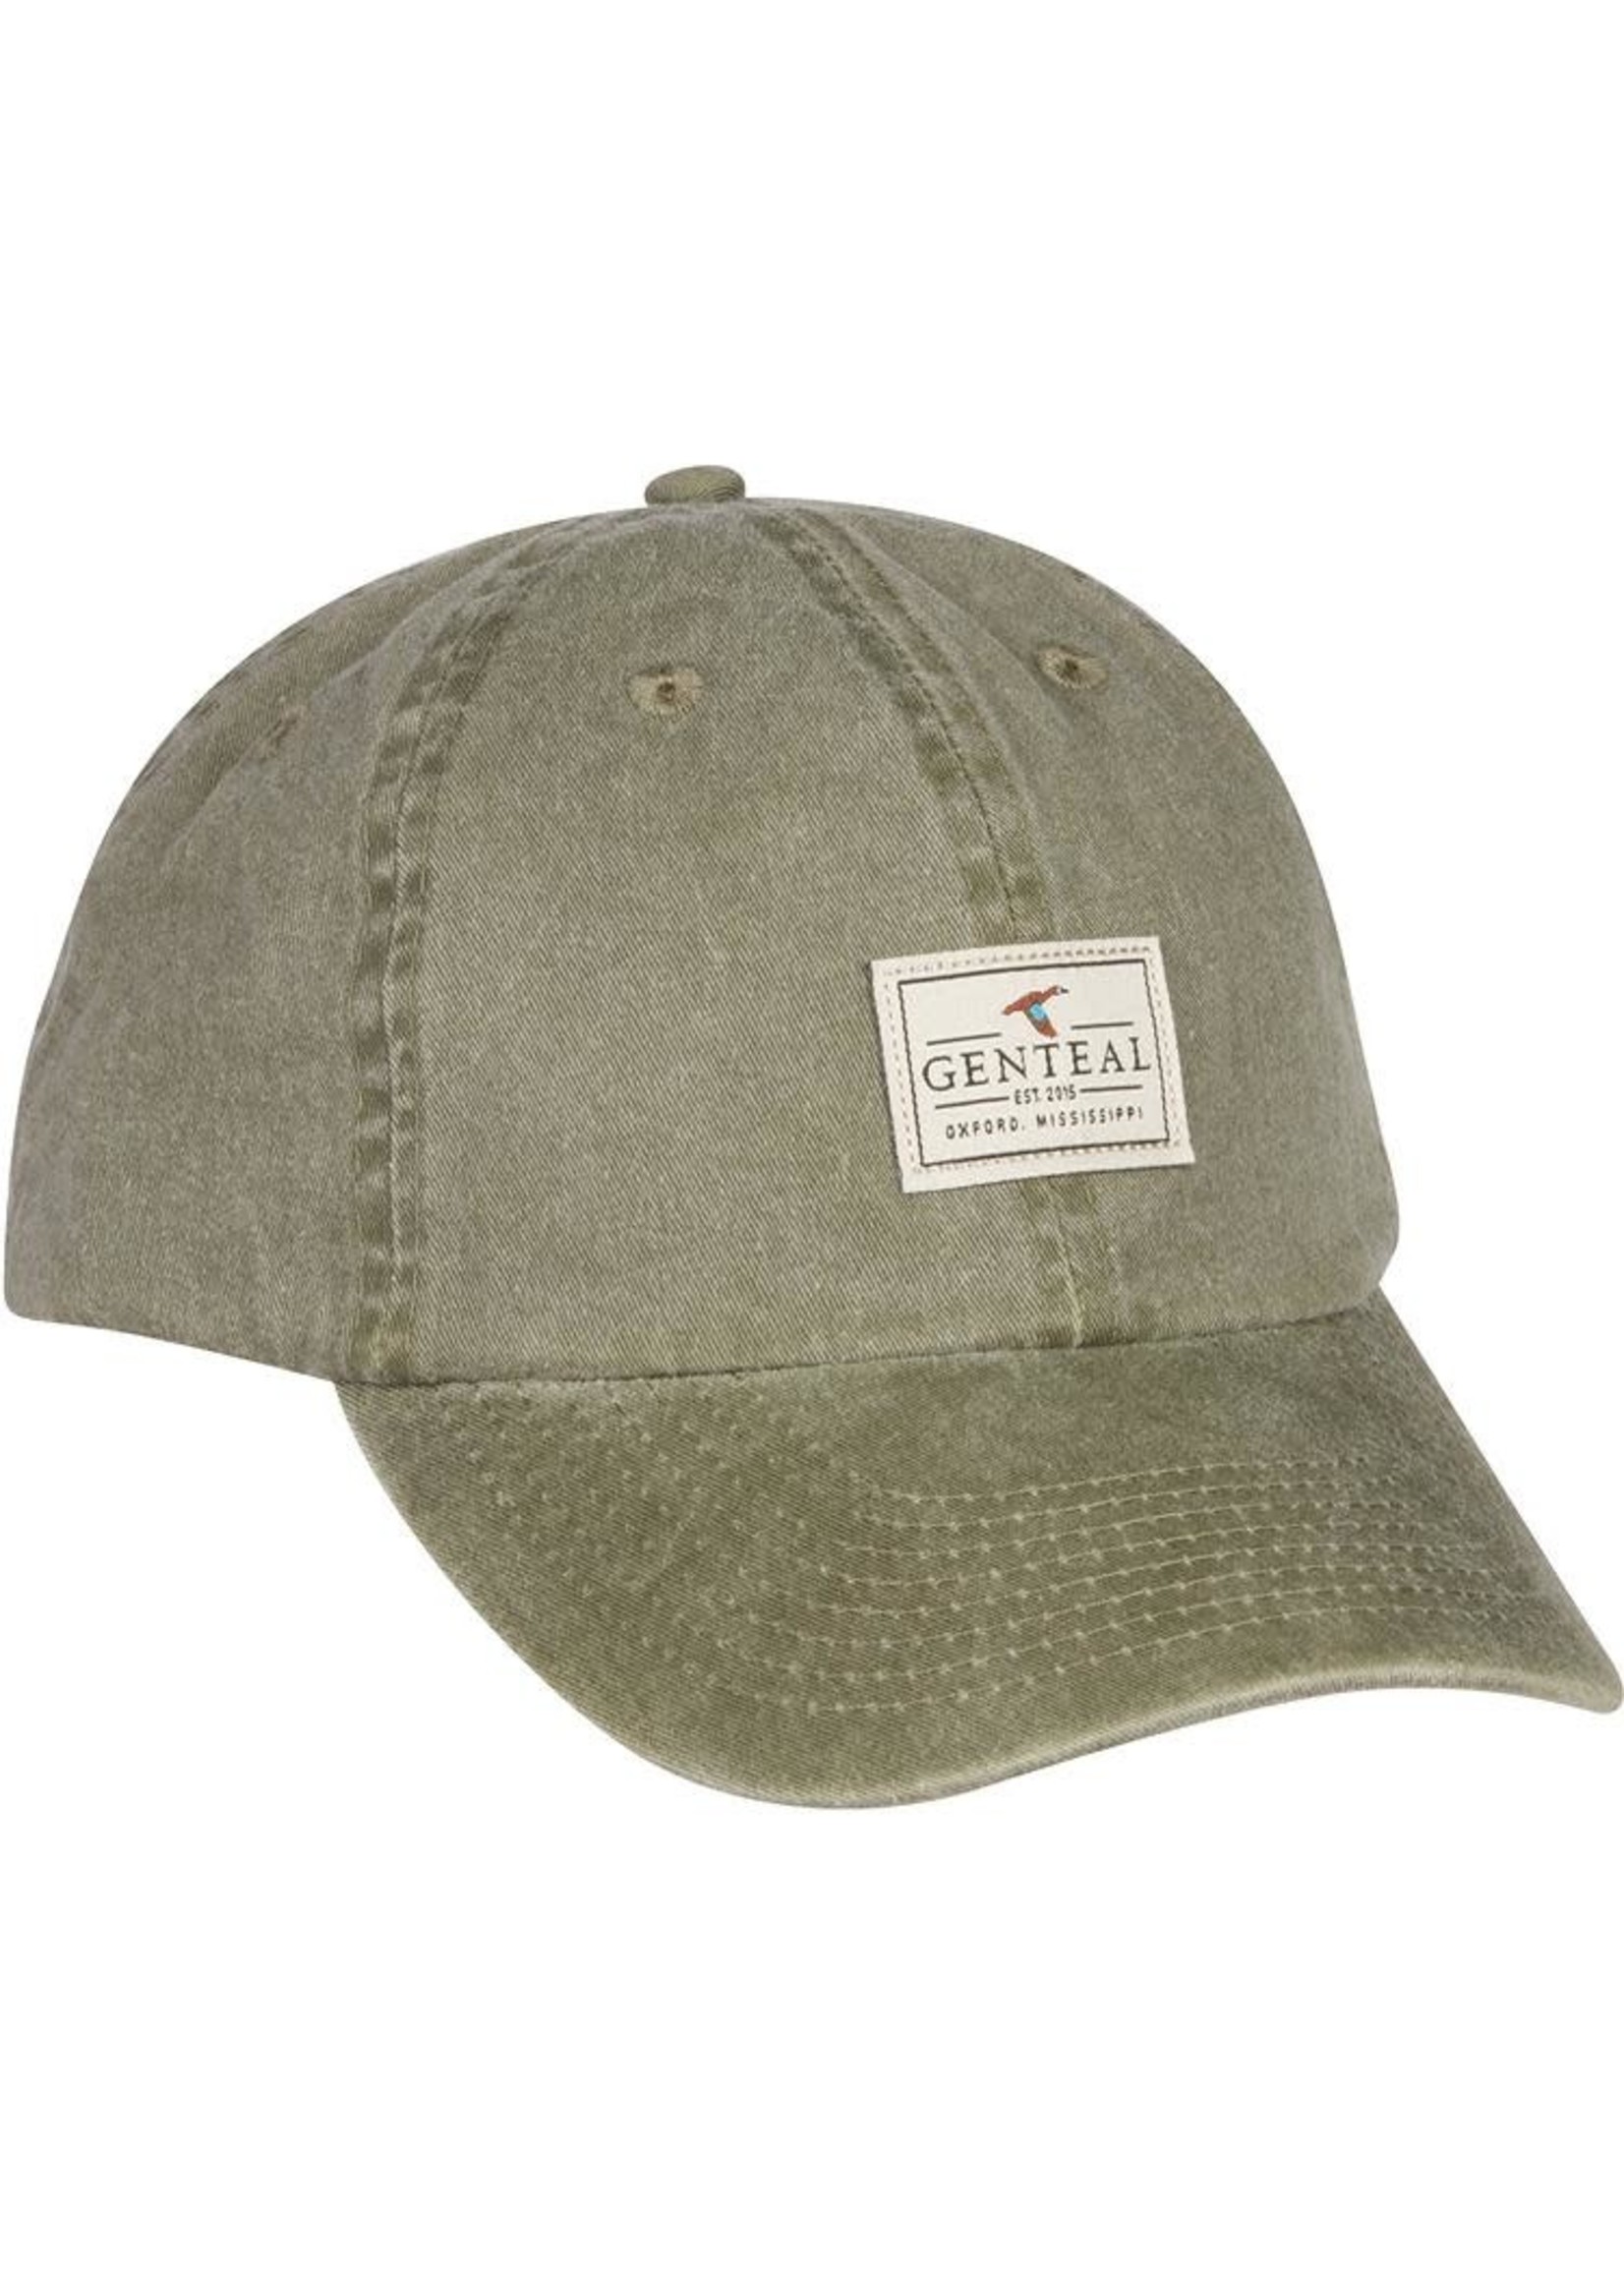 GenTeal Apparel Patch Hat